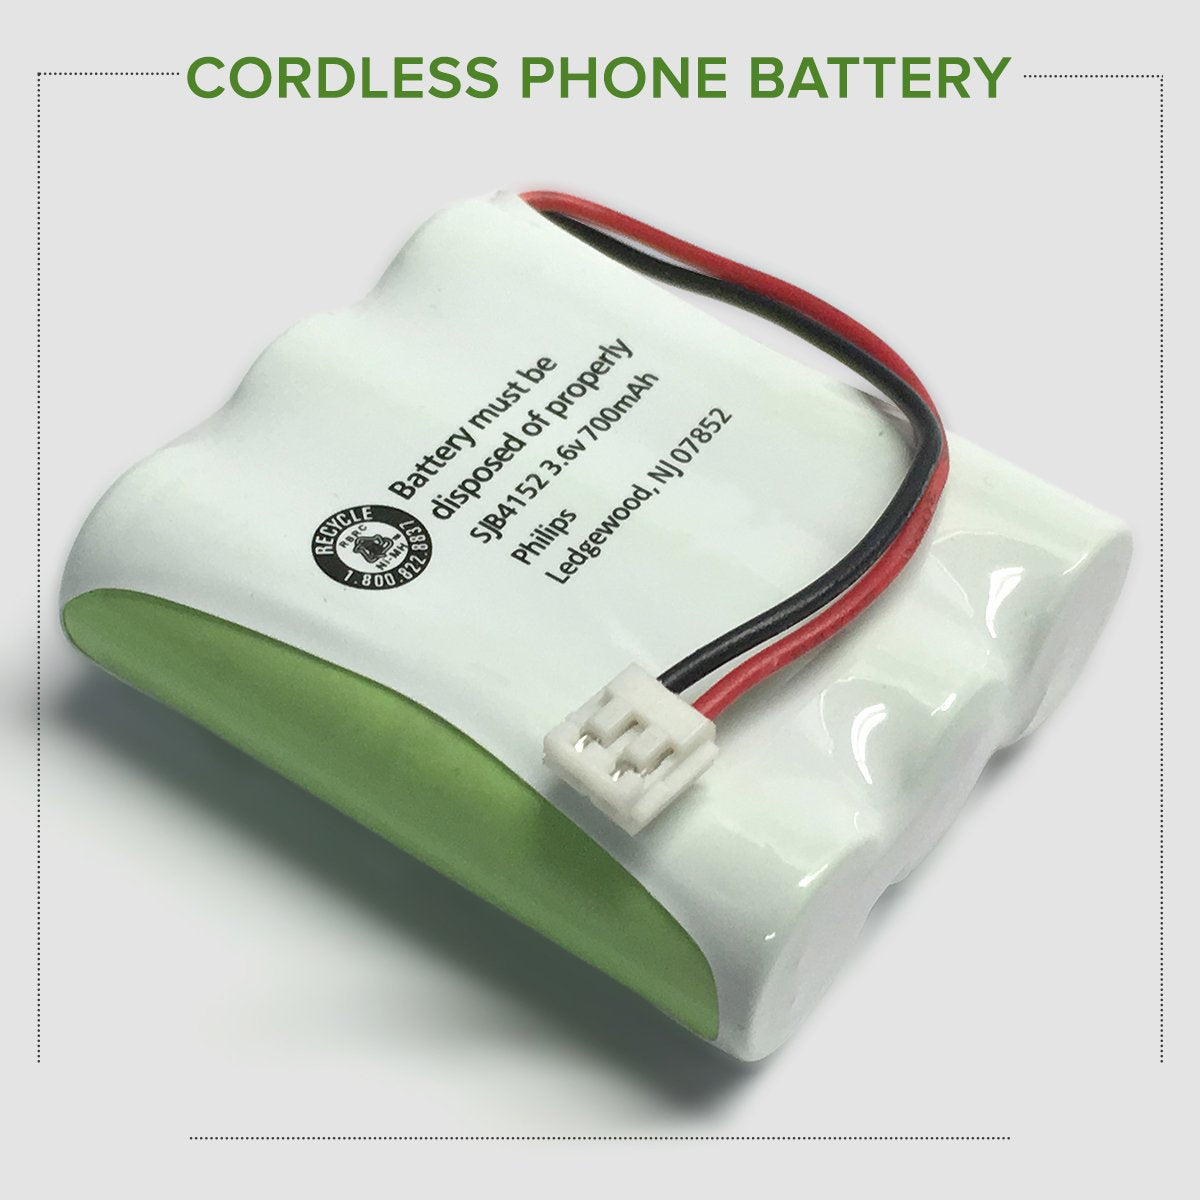 GE TL26506 Cordless Phone Battery